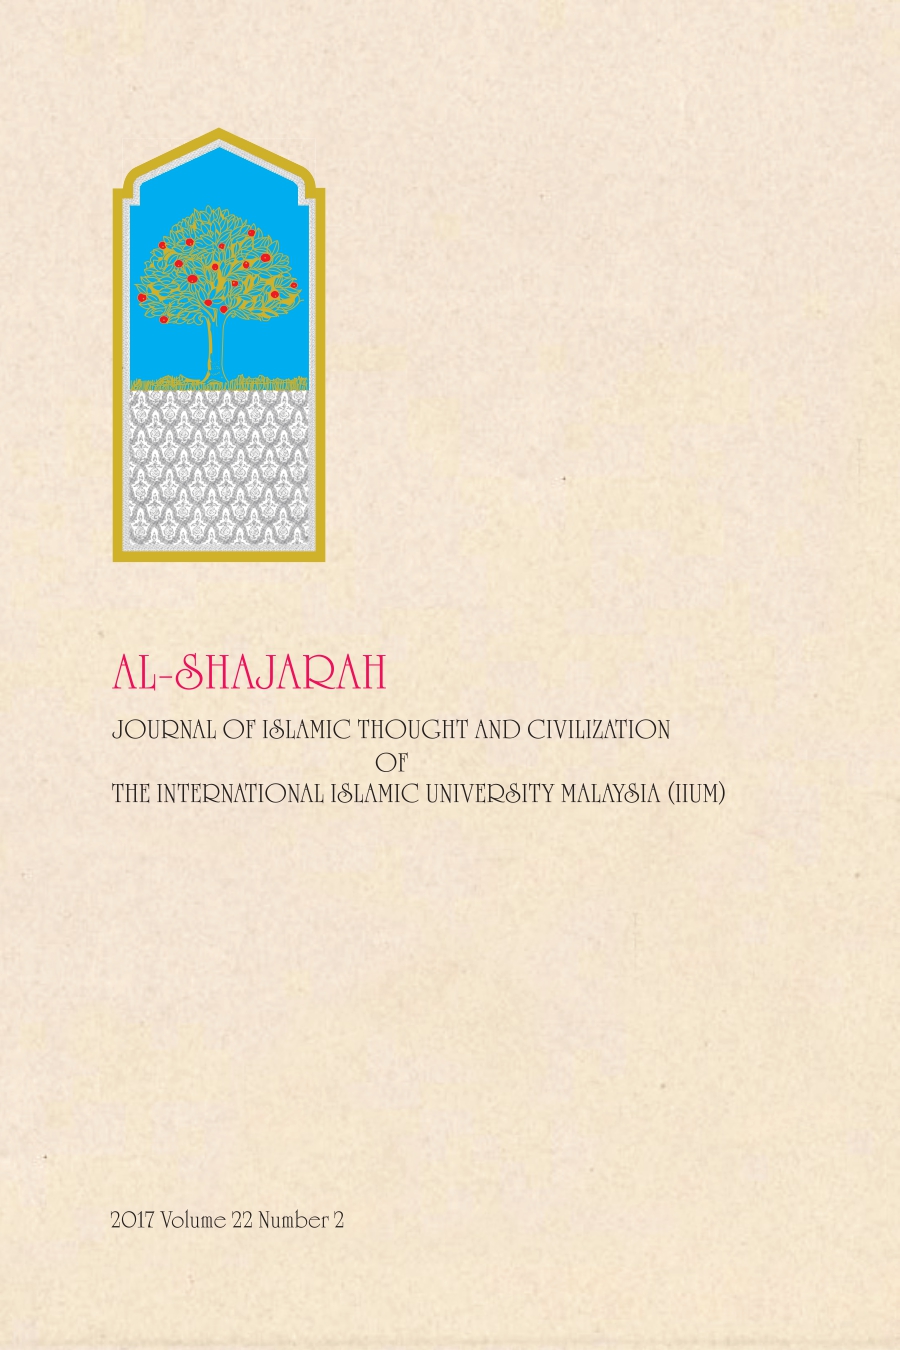 Homam Altabaa, Spirituality in Modern Literature: Kahlil Gibran and the Spiritual Quest, "Al-Shajarah", The International Islamic University Malaysia (IIUM), Vol. 22, No. 2, 2017, pp. 215-236.